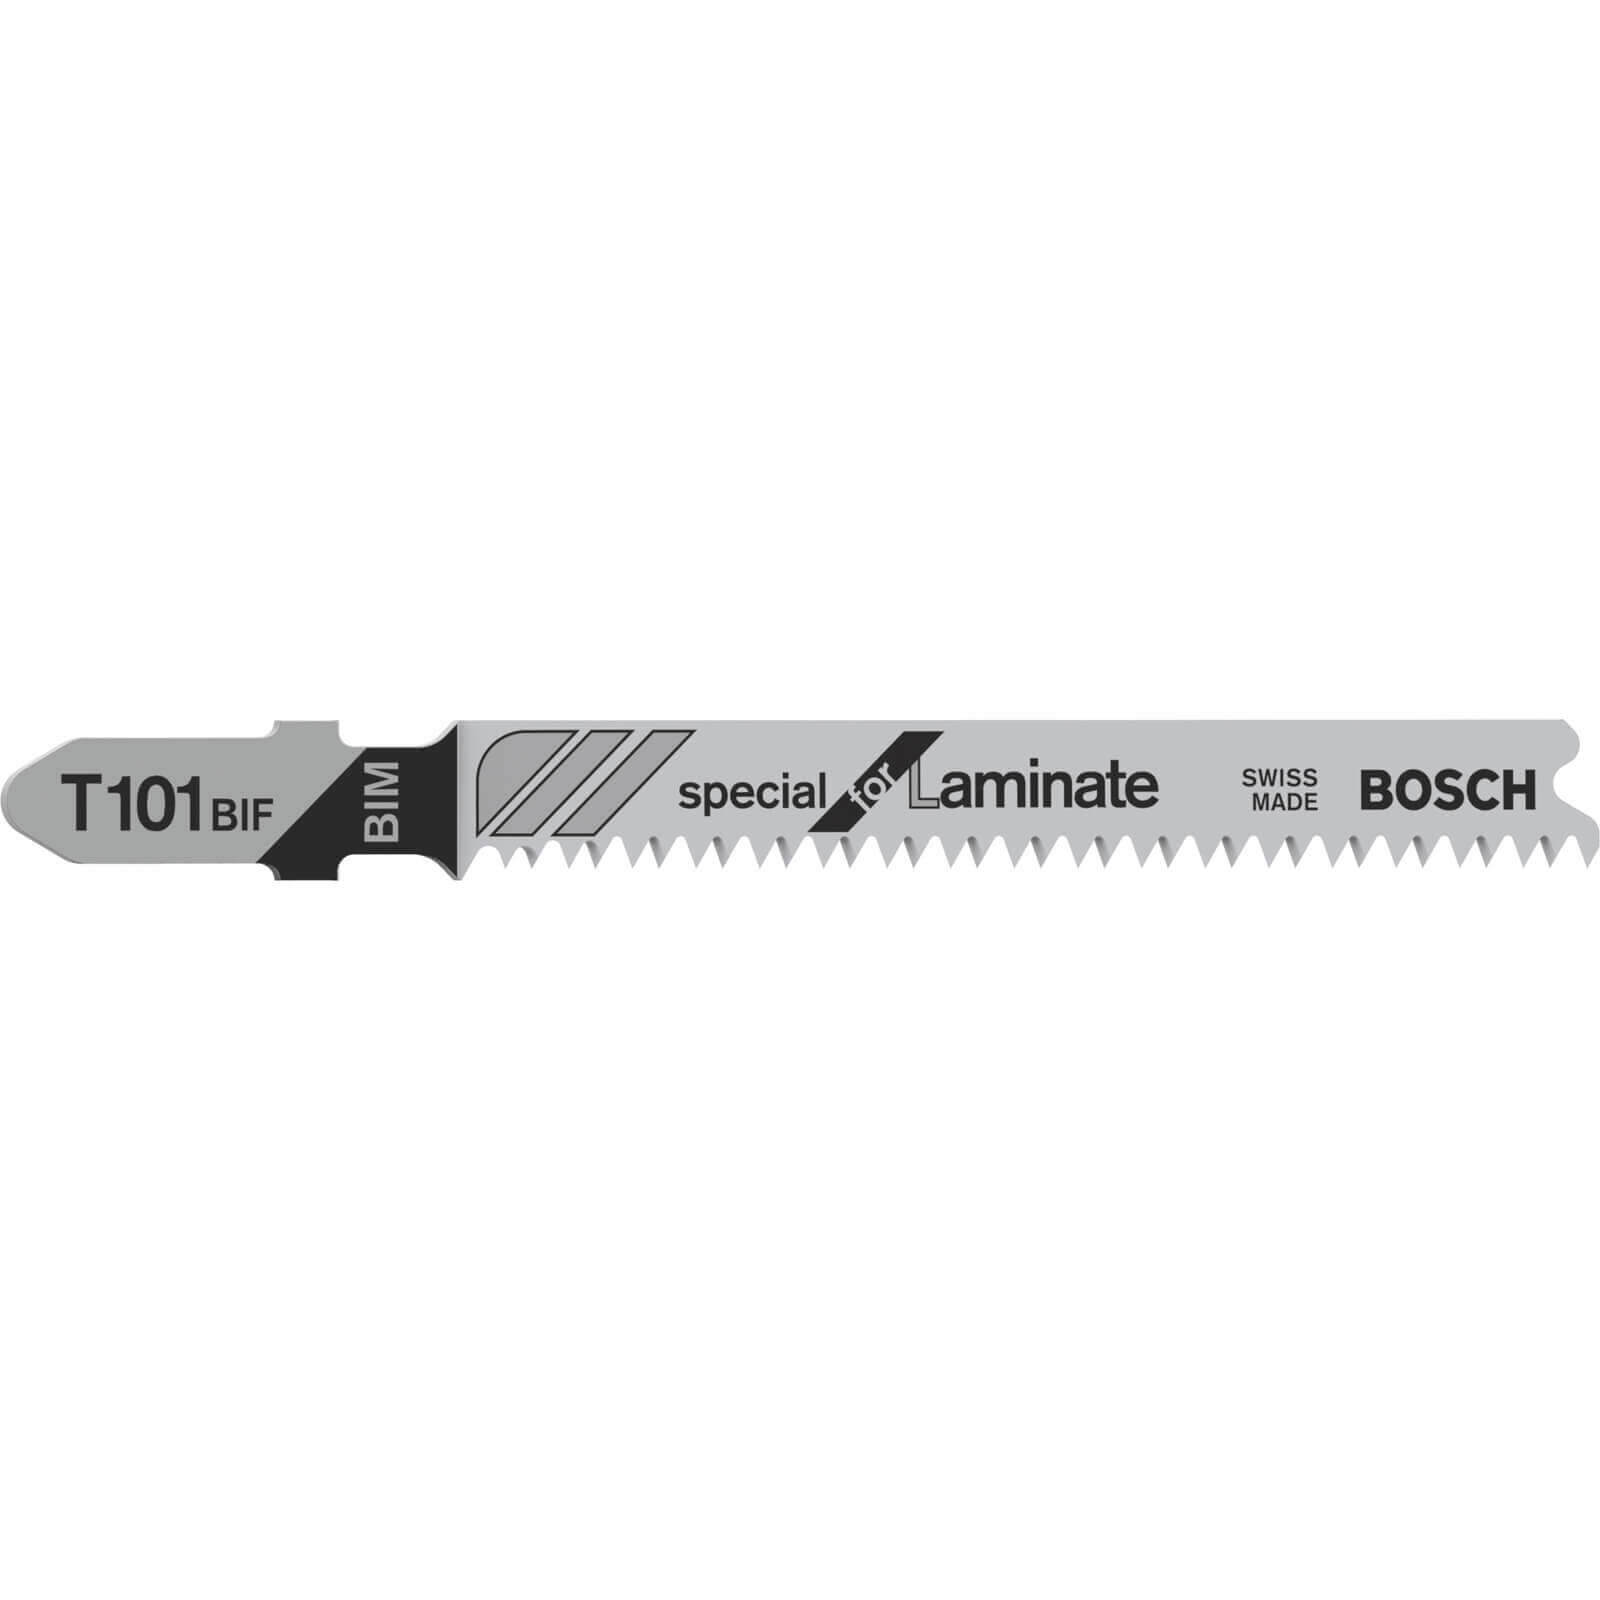 Image of Bosch T101 BIF Laminate Cutting Jigsaw Blades Pack of 5